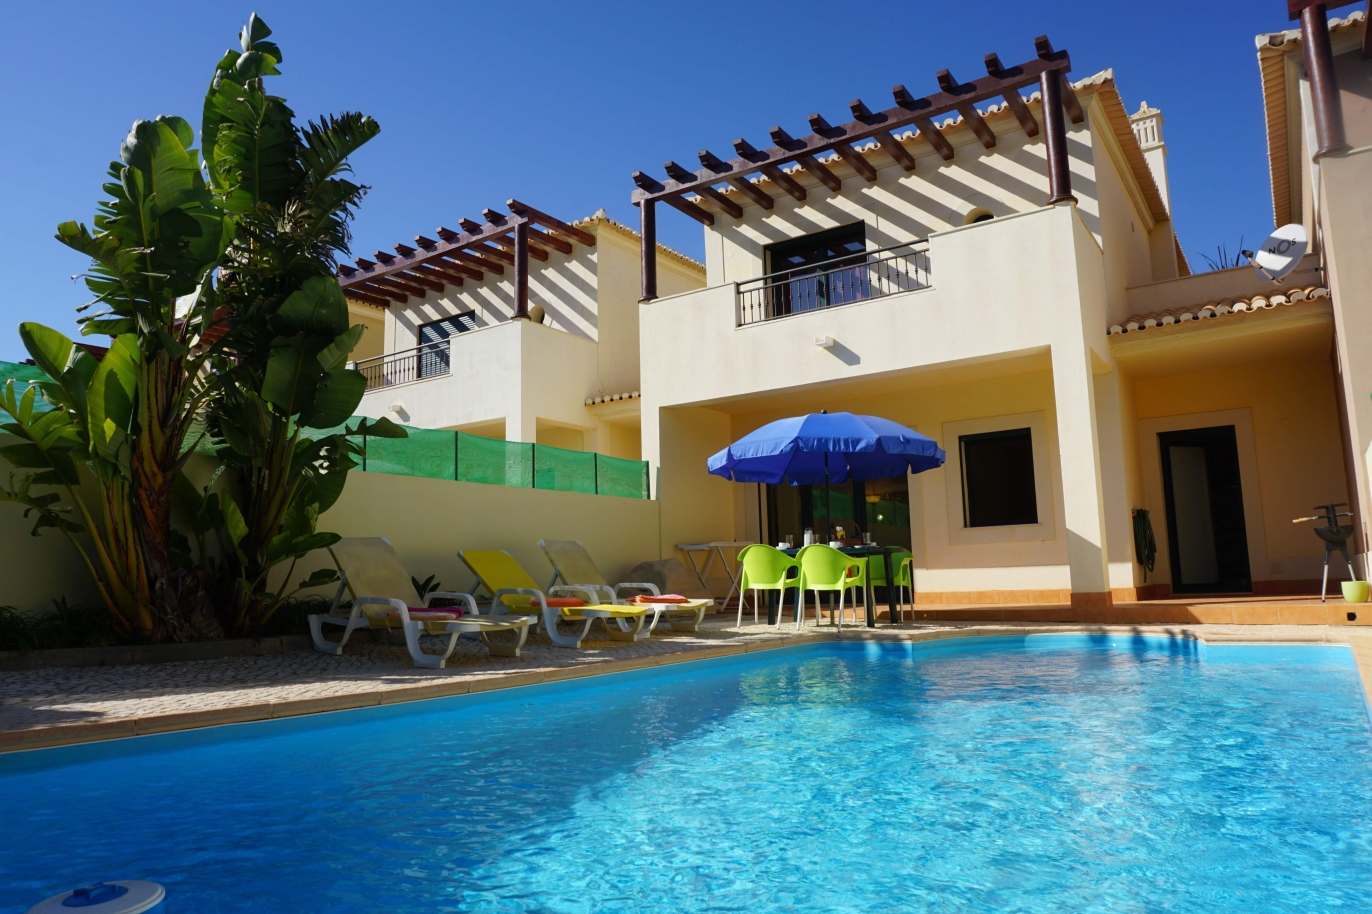 Venda de moradia com piscina em Budens, Vila do Bispo, Algarve_118806